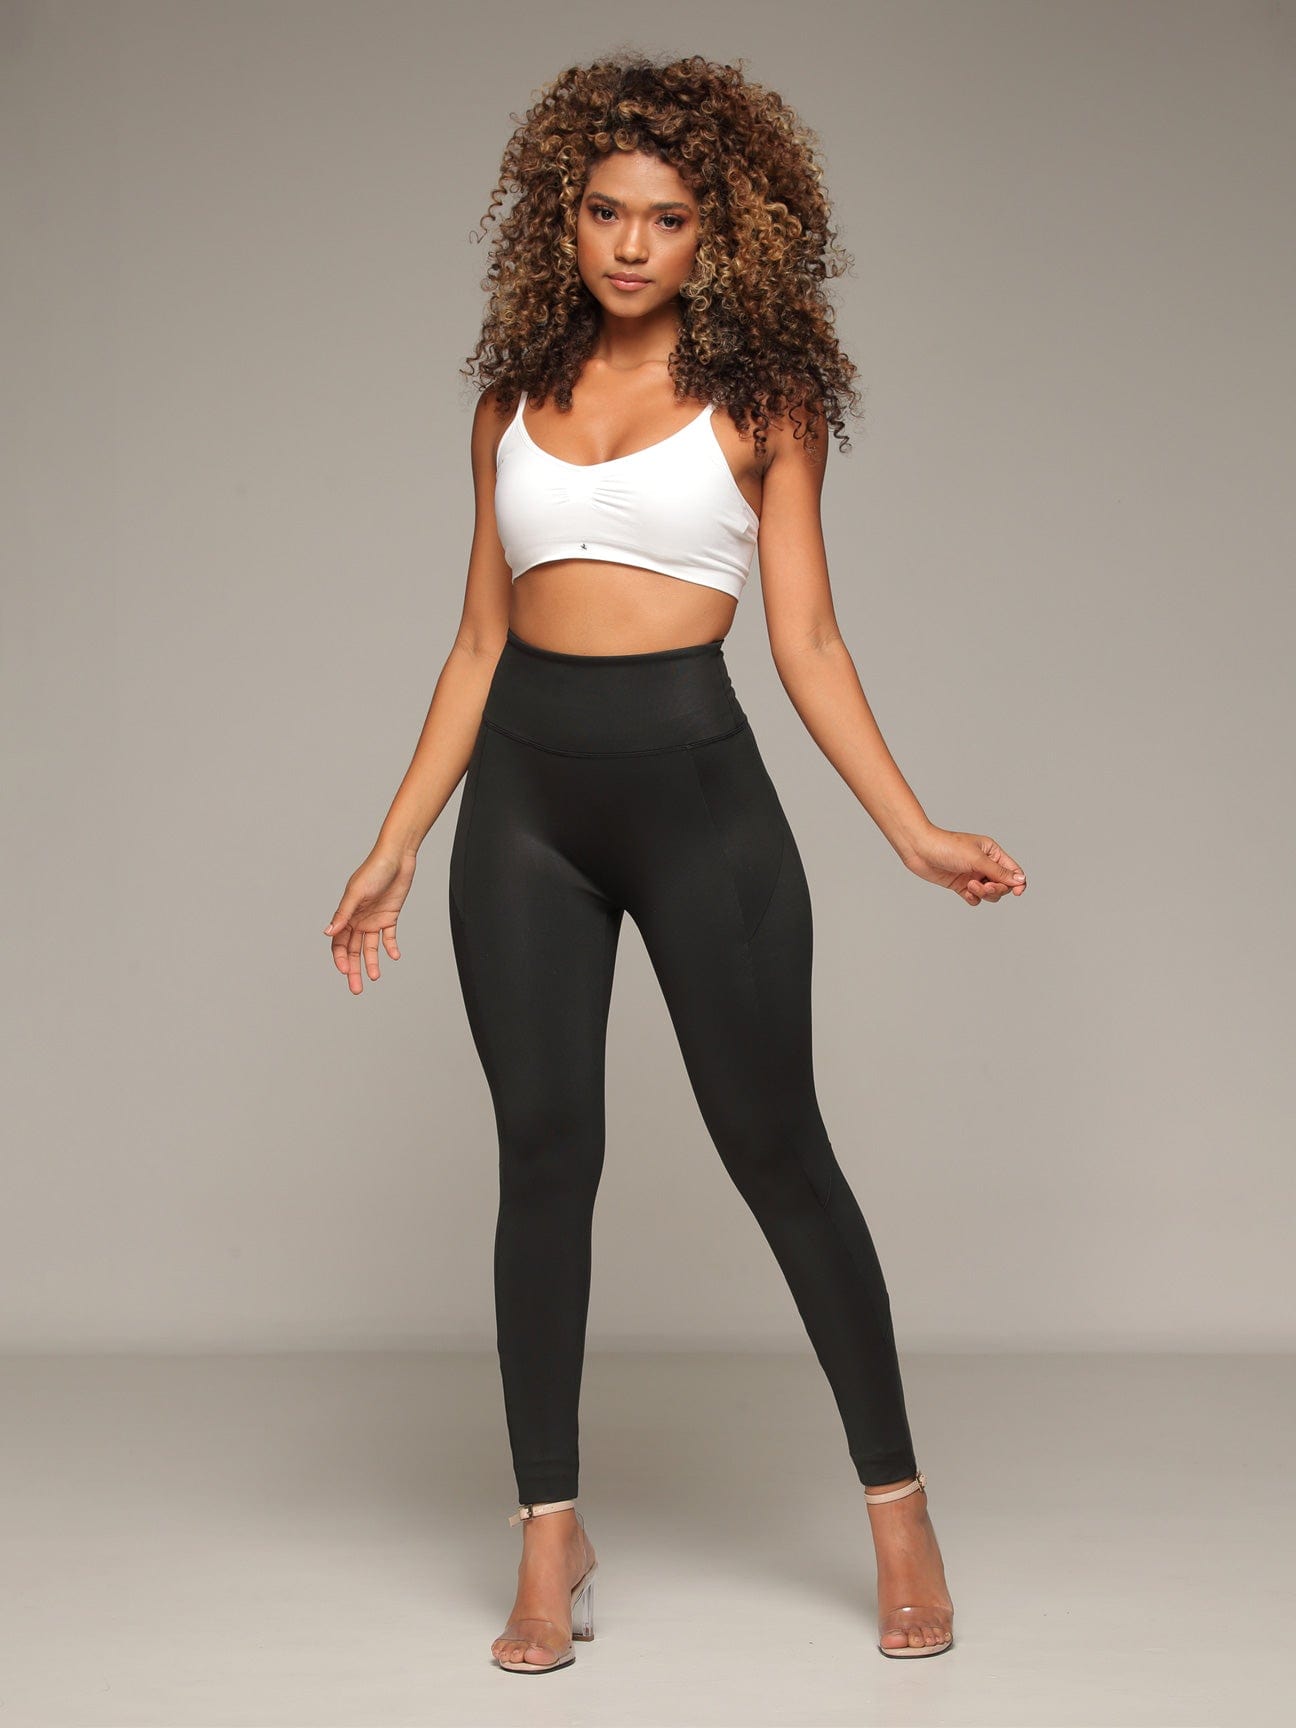 Colombian Leggings Brandfit Gym Sportwear/Tummy Control/ Butt